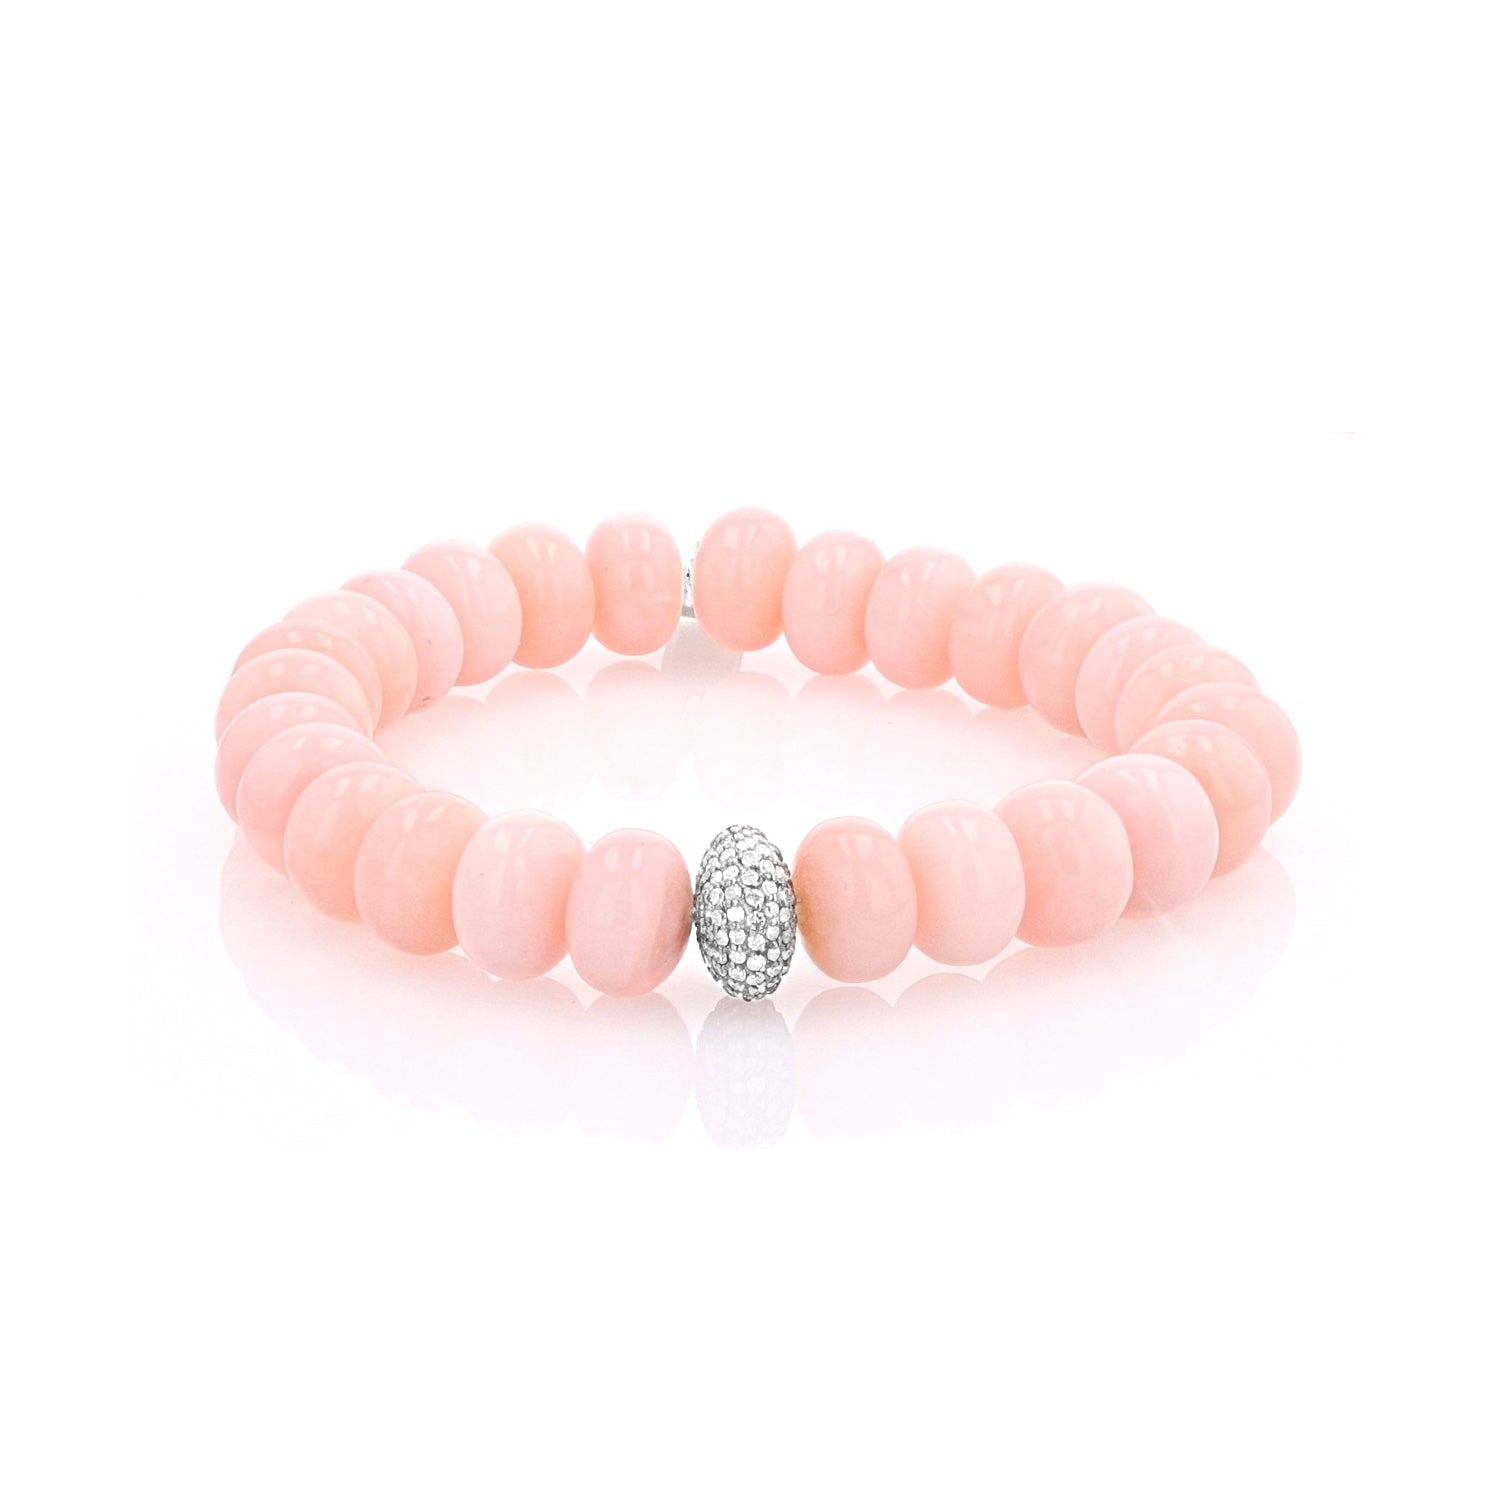 Pink Opal Rondelle Bracelet with Diamond Donut - 10mm  B0003683 - TBird